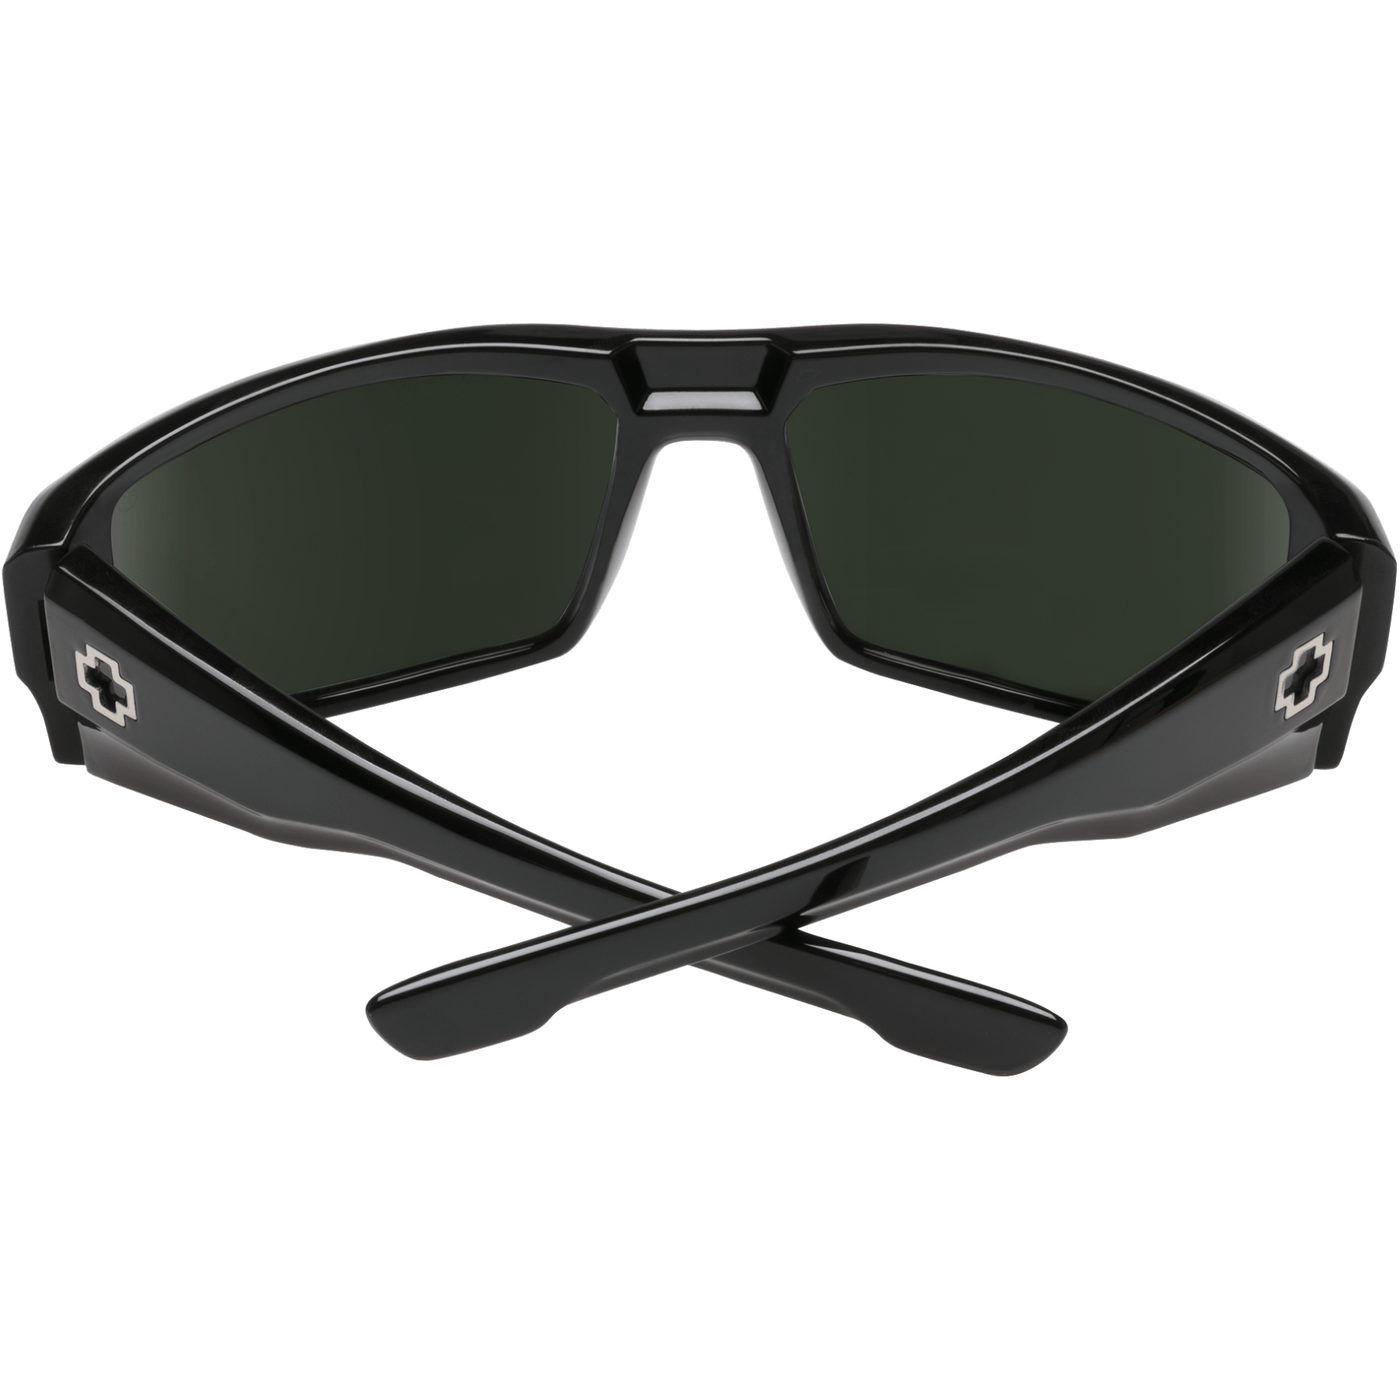 SPY DIRK Polarized Sunglasses, Happy Lens - Black 8Lines Shop - Fast Shipping